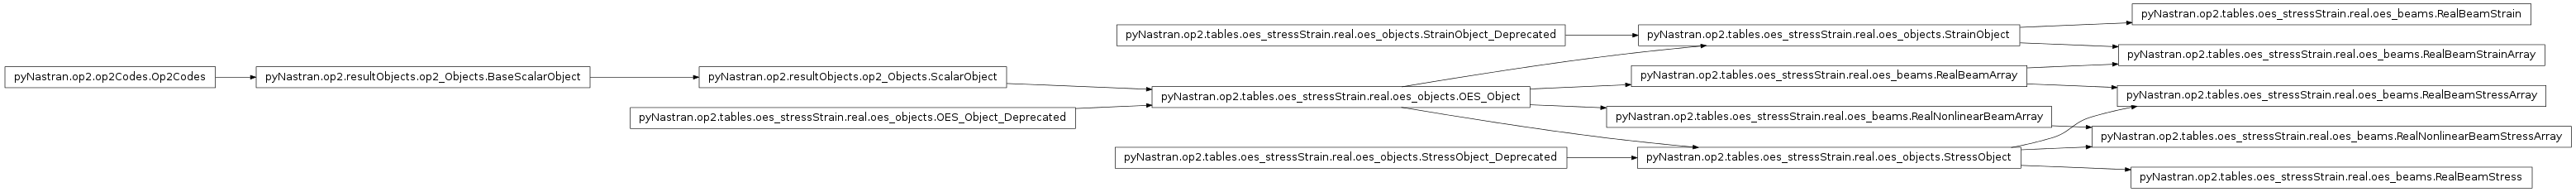 Inheritance diagram of pyNastran.op2.tables.oes_stressStrain.real.oes_beams